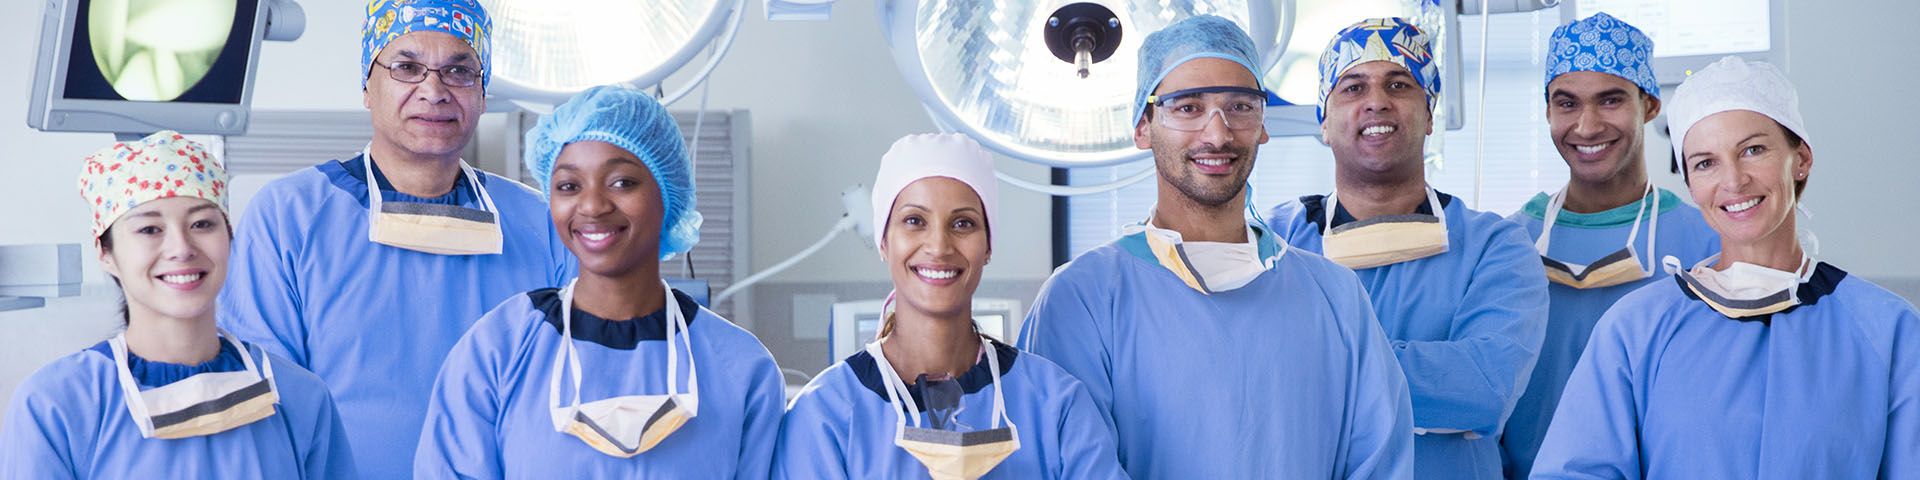 Group of people in operating room wearing scrubs smiling